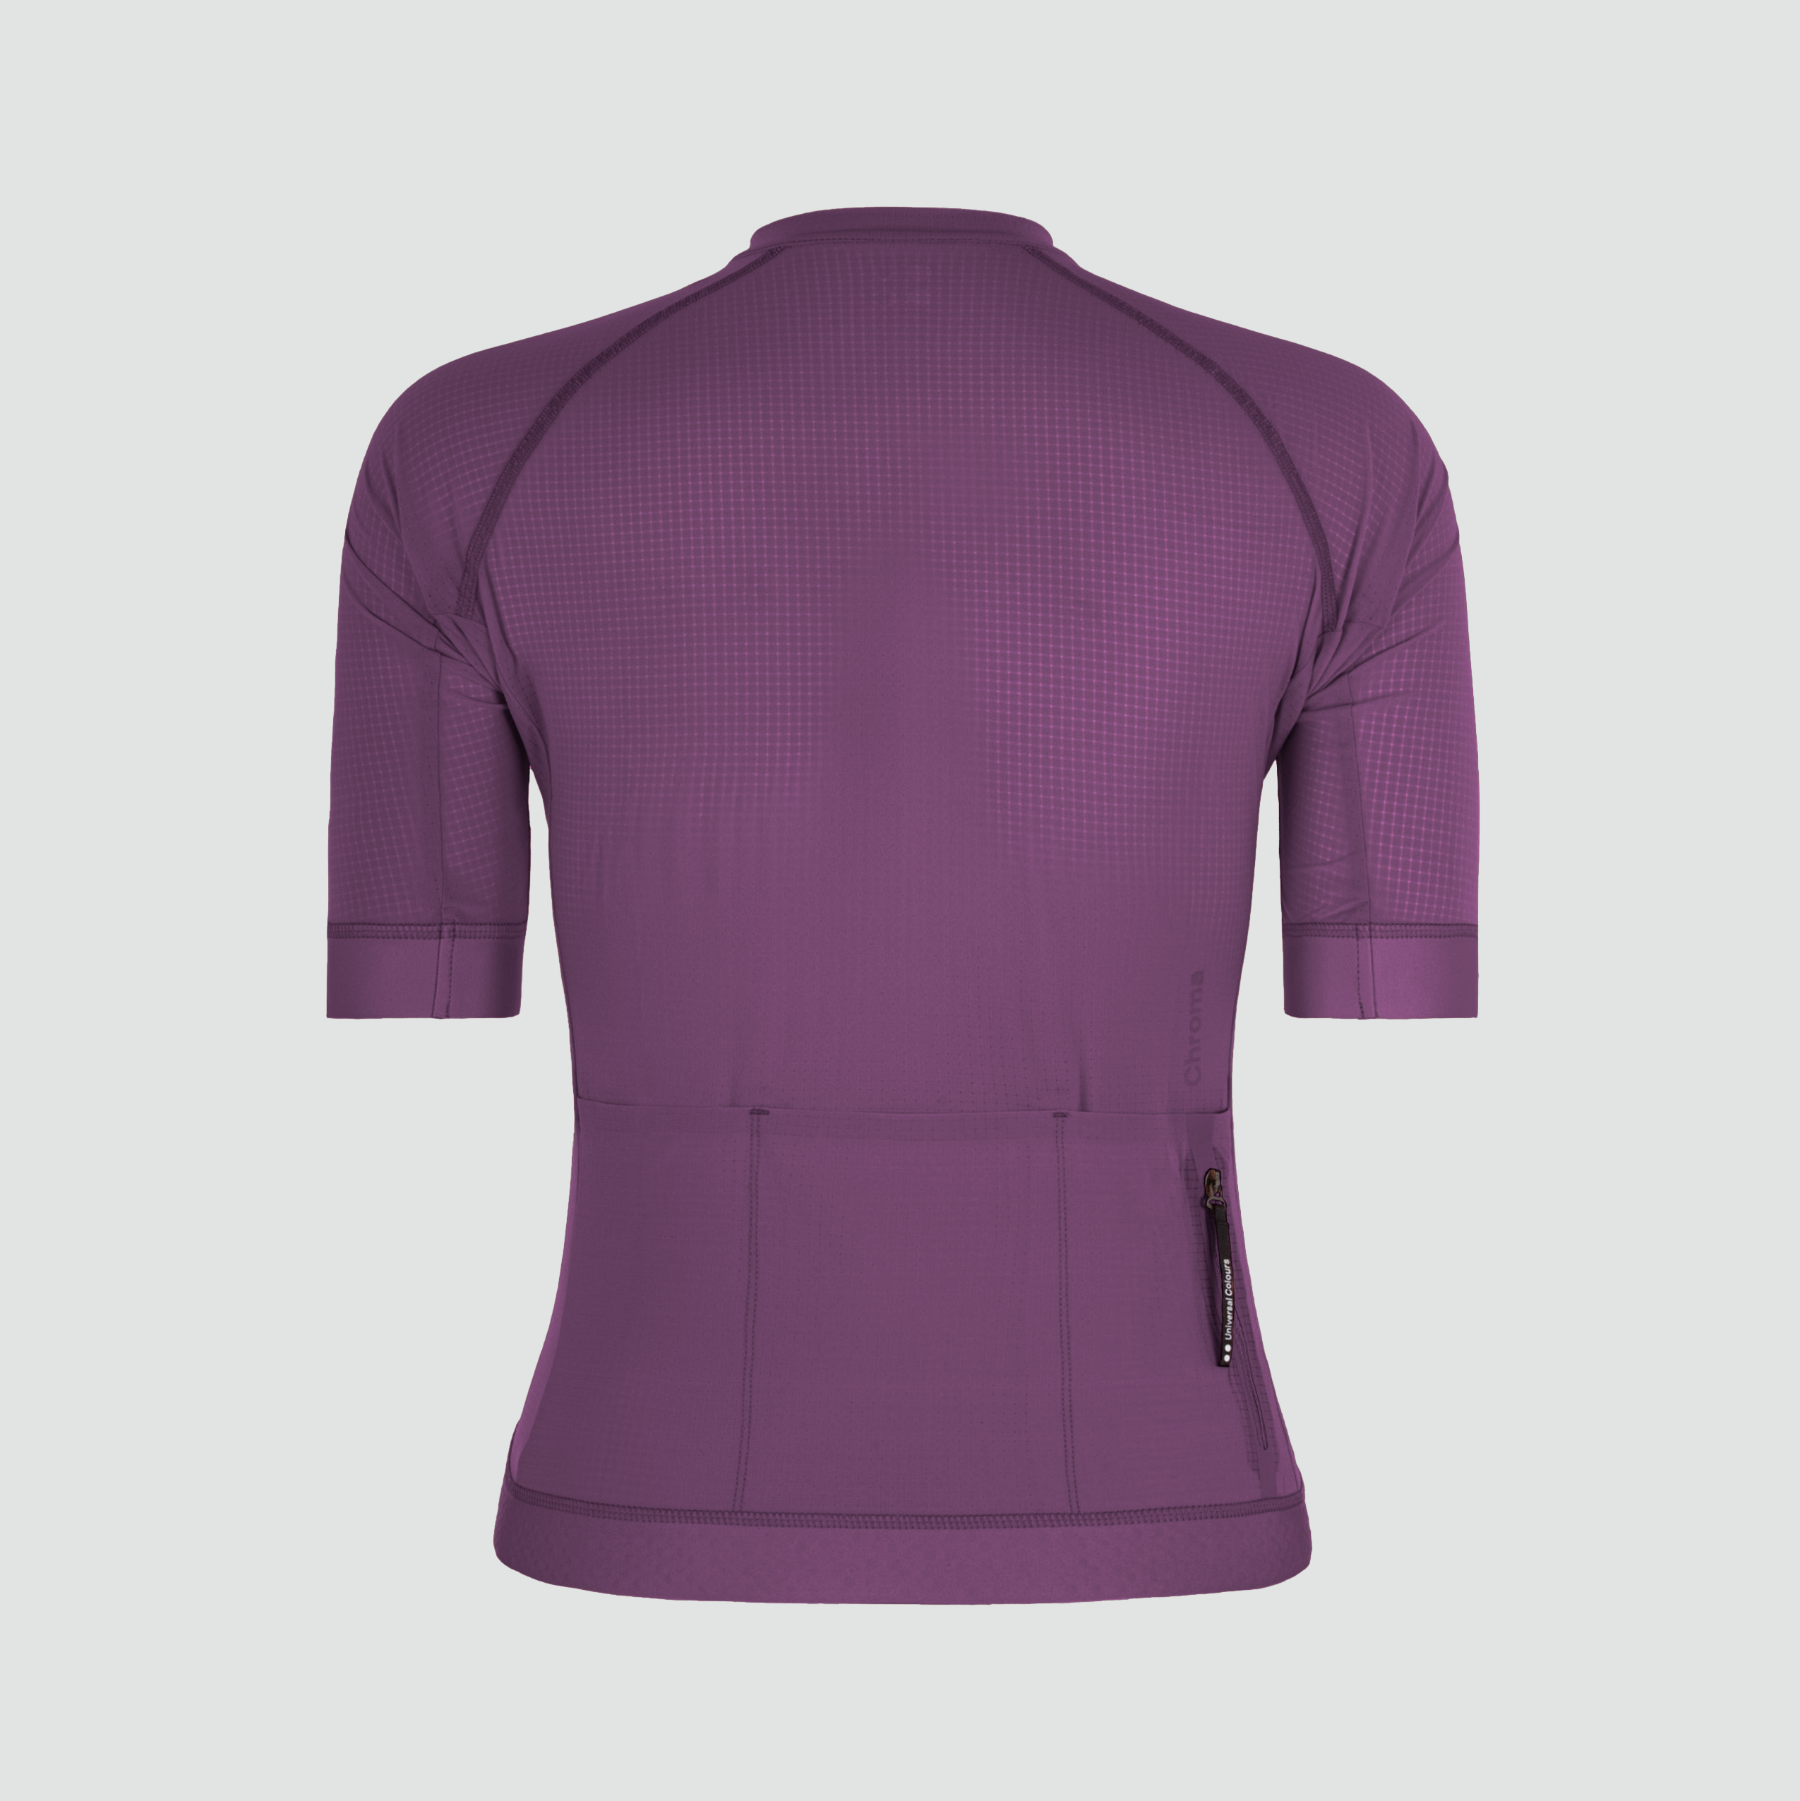 Chroma Womens Short Sleeve Jersey - Berry Purple